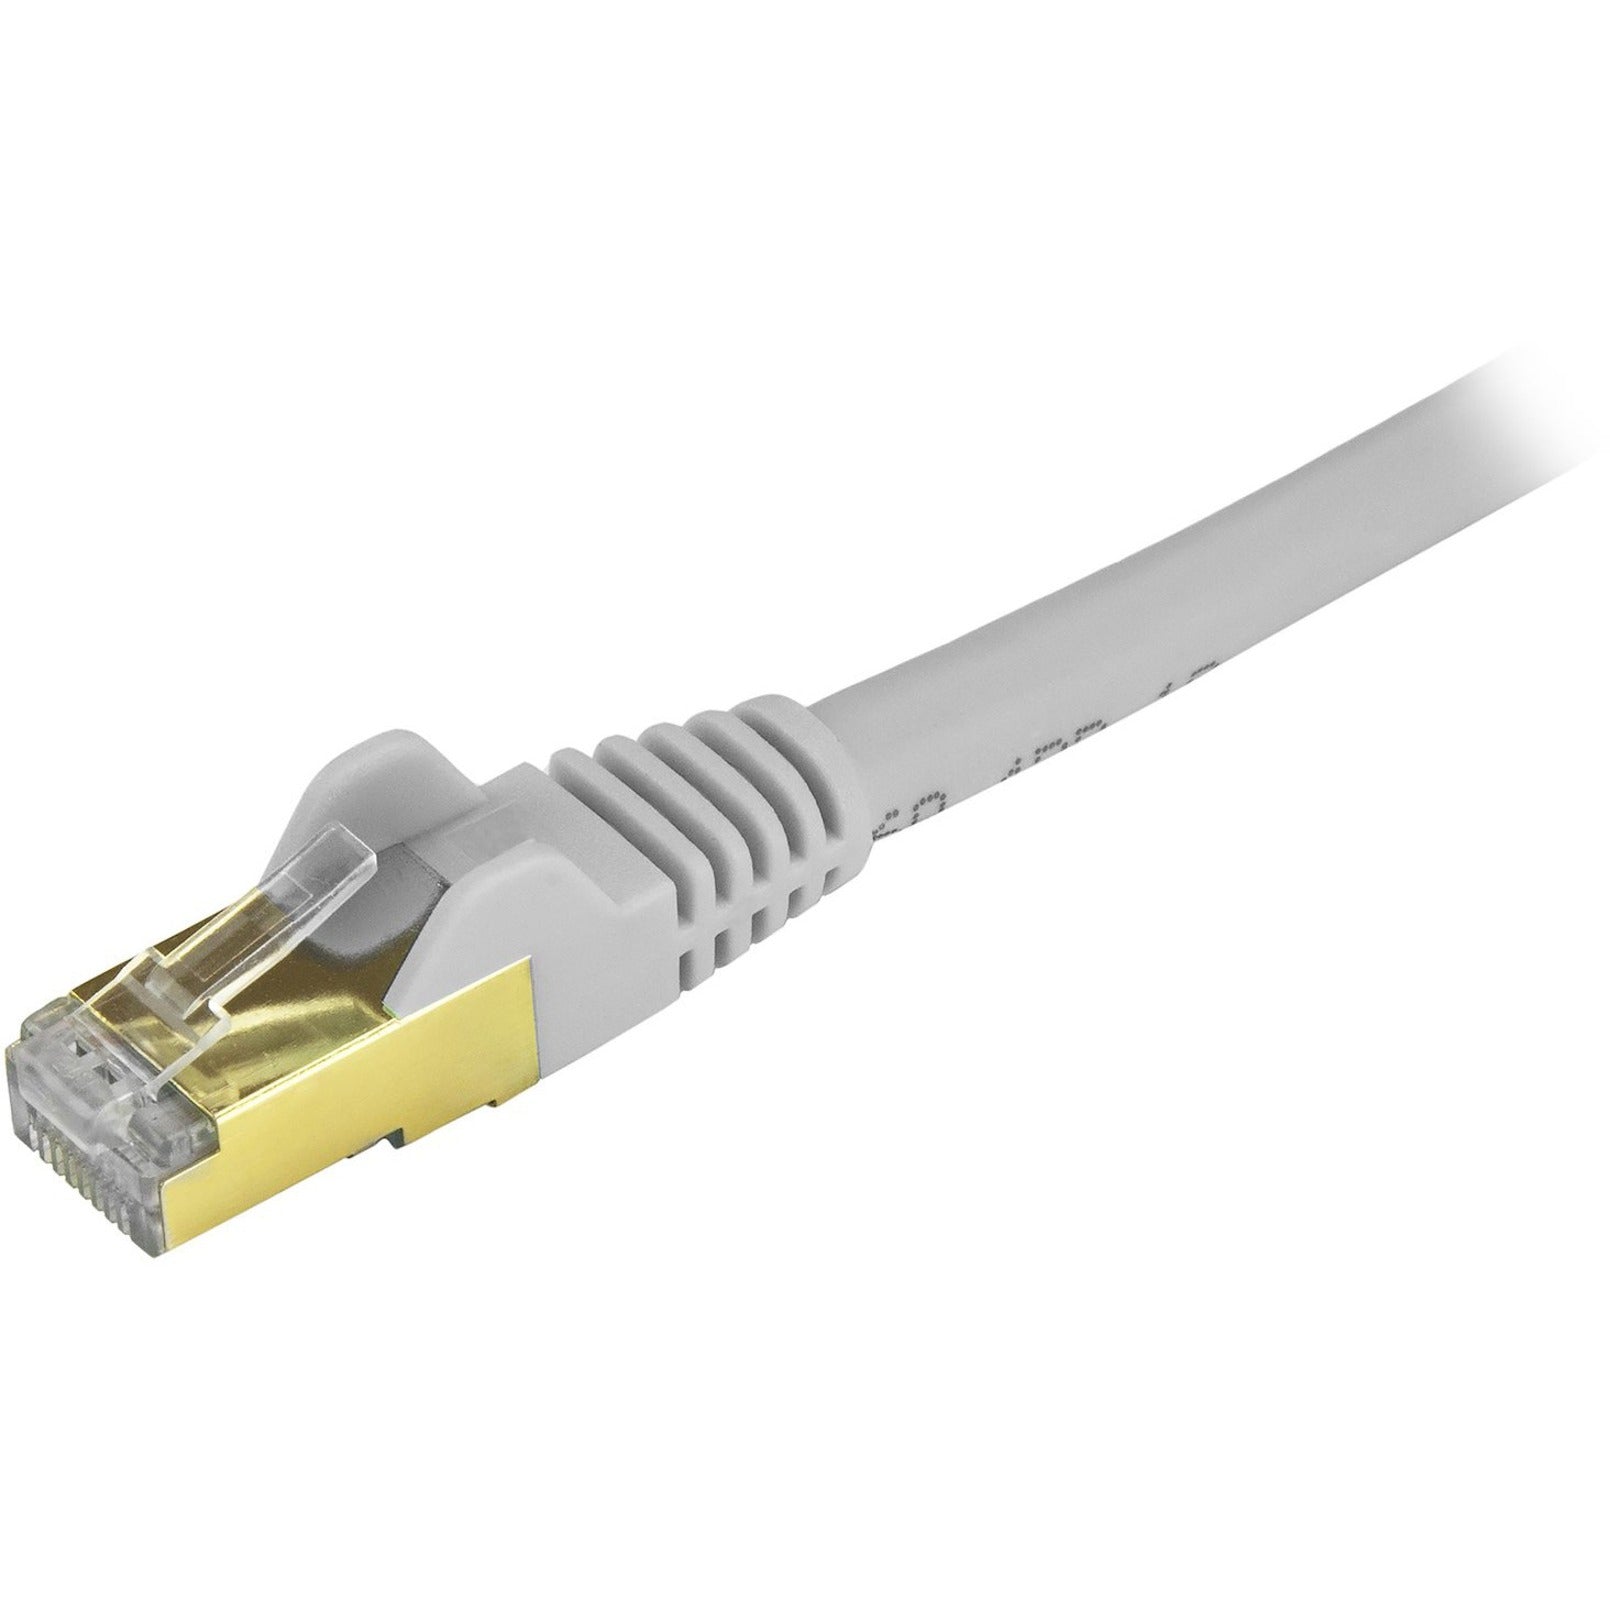 StarTech.com C6ASPAT9GR Cable de conexión Ethernet Cat6a - Blindado (STP) - 9 pies Gris Cordón Ethernet RJ45 sin enganches